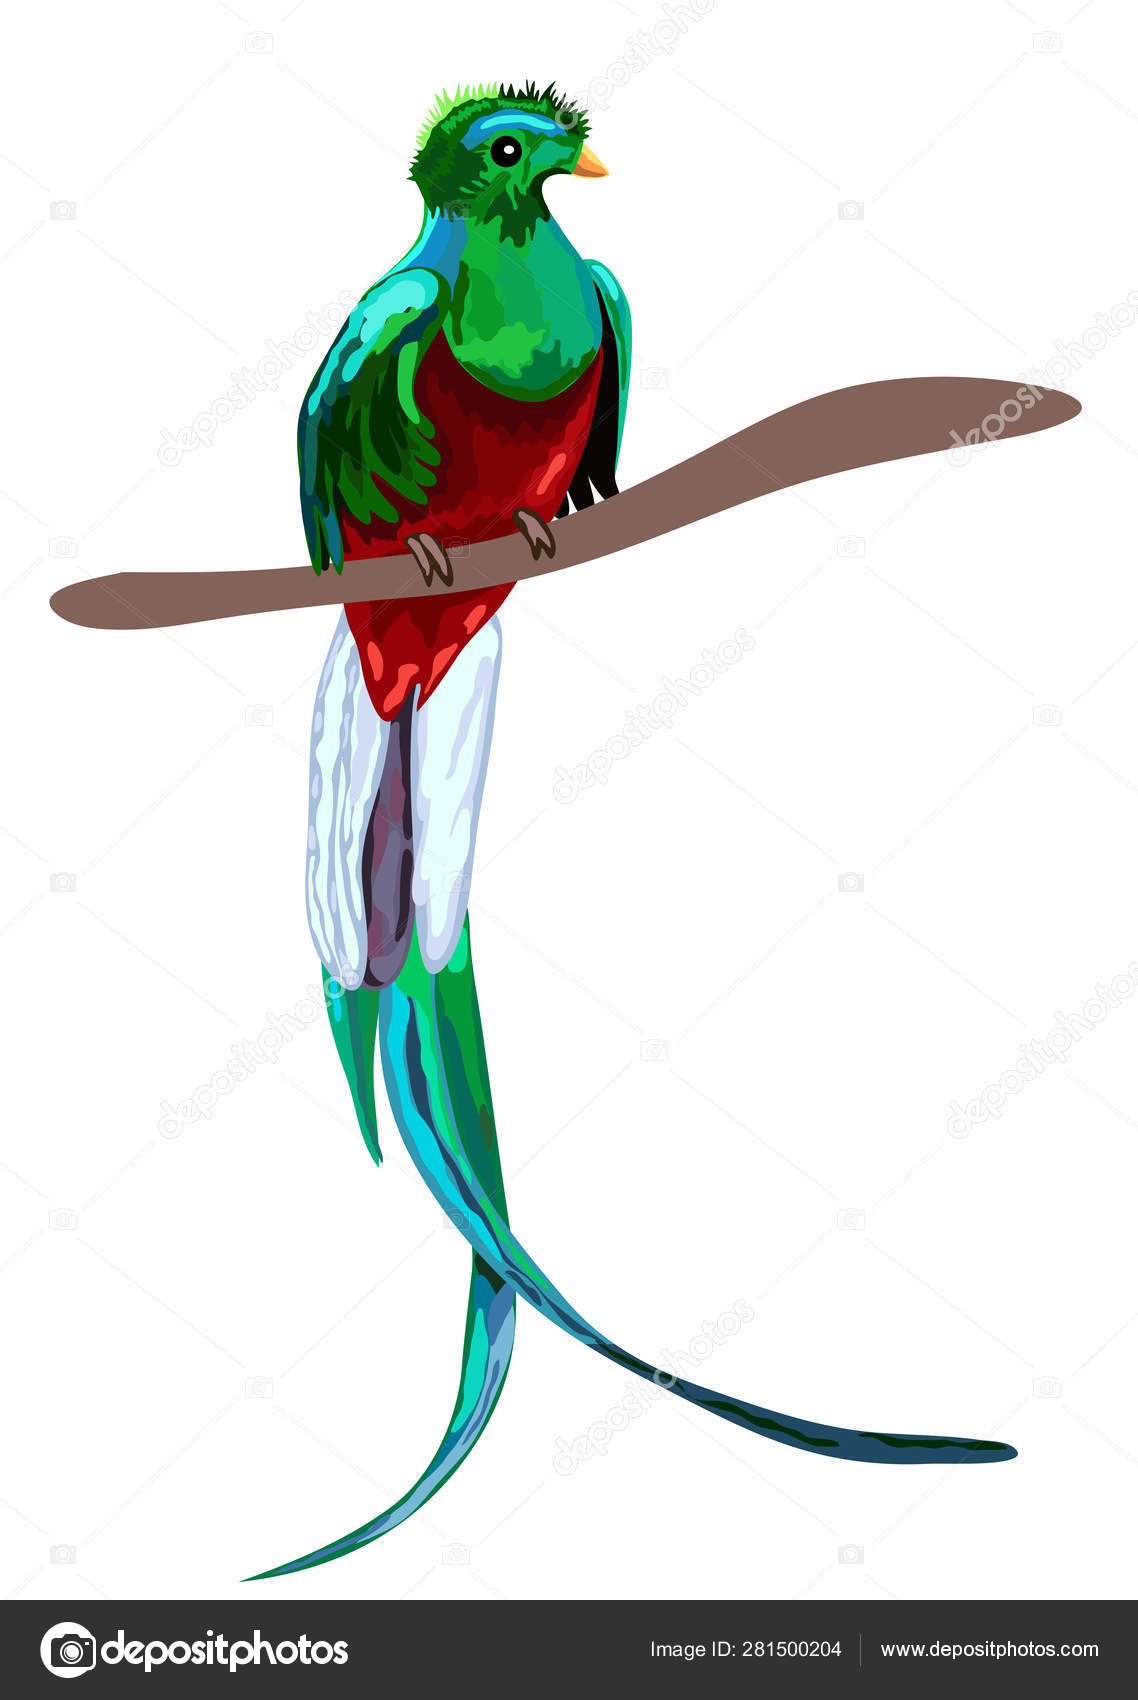 Pajaro quetzal imágenes de stock de arte vectorial | Depositphotos